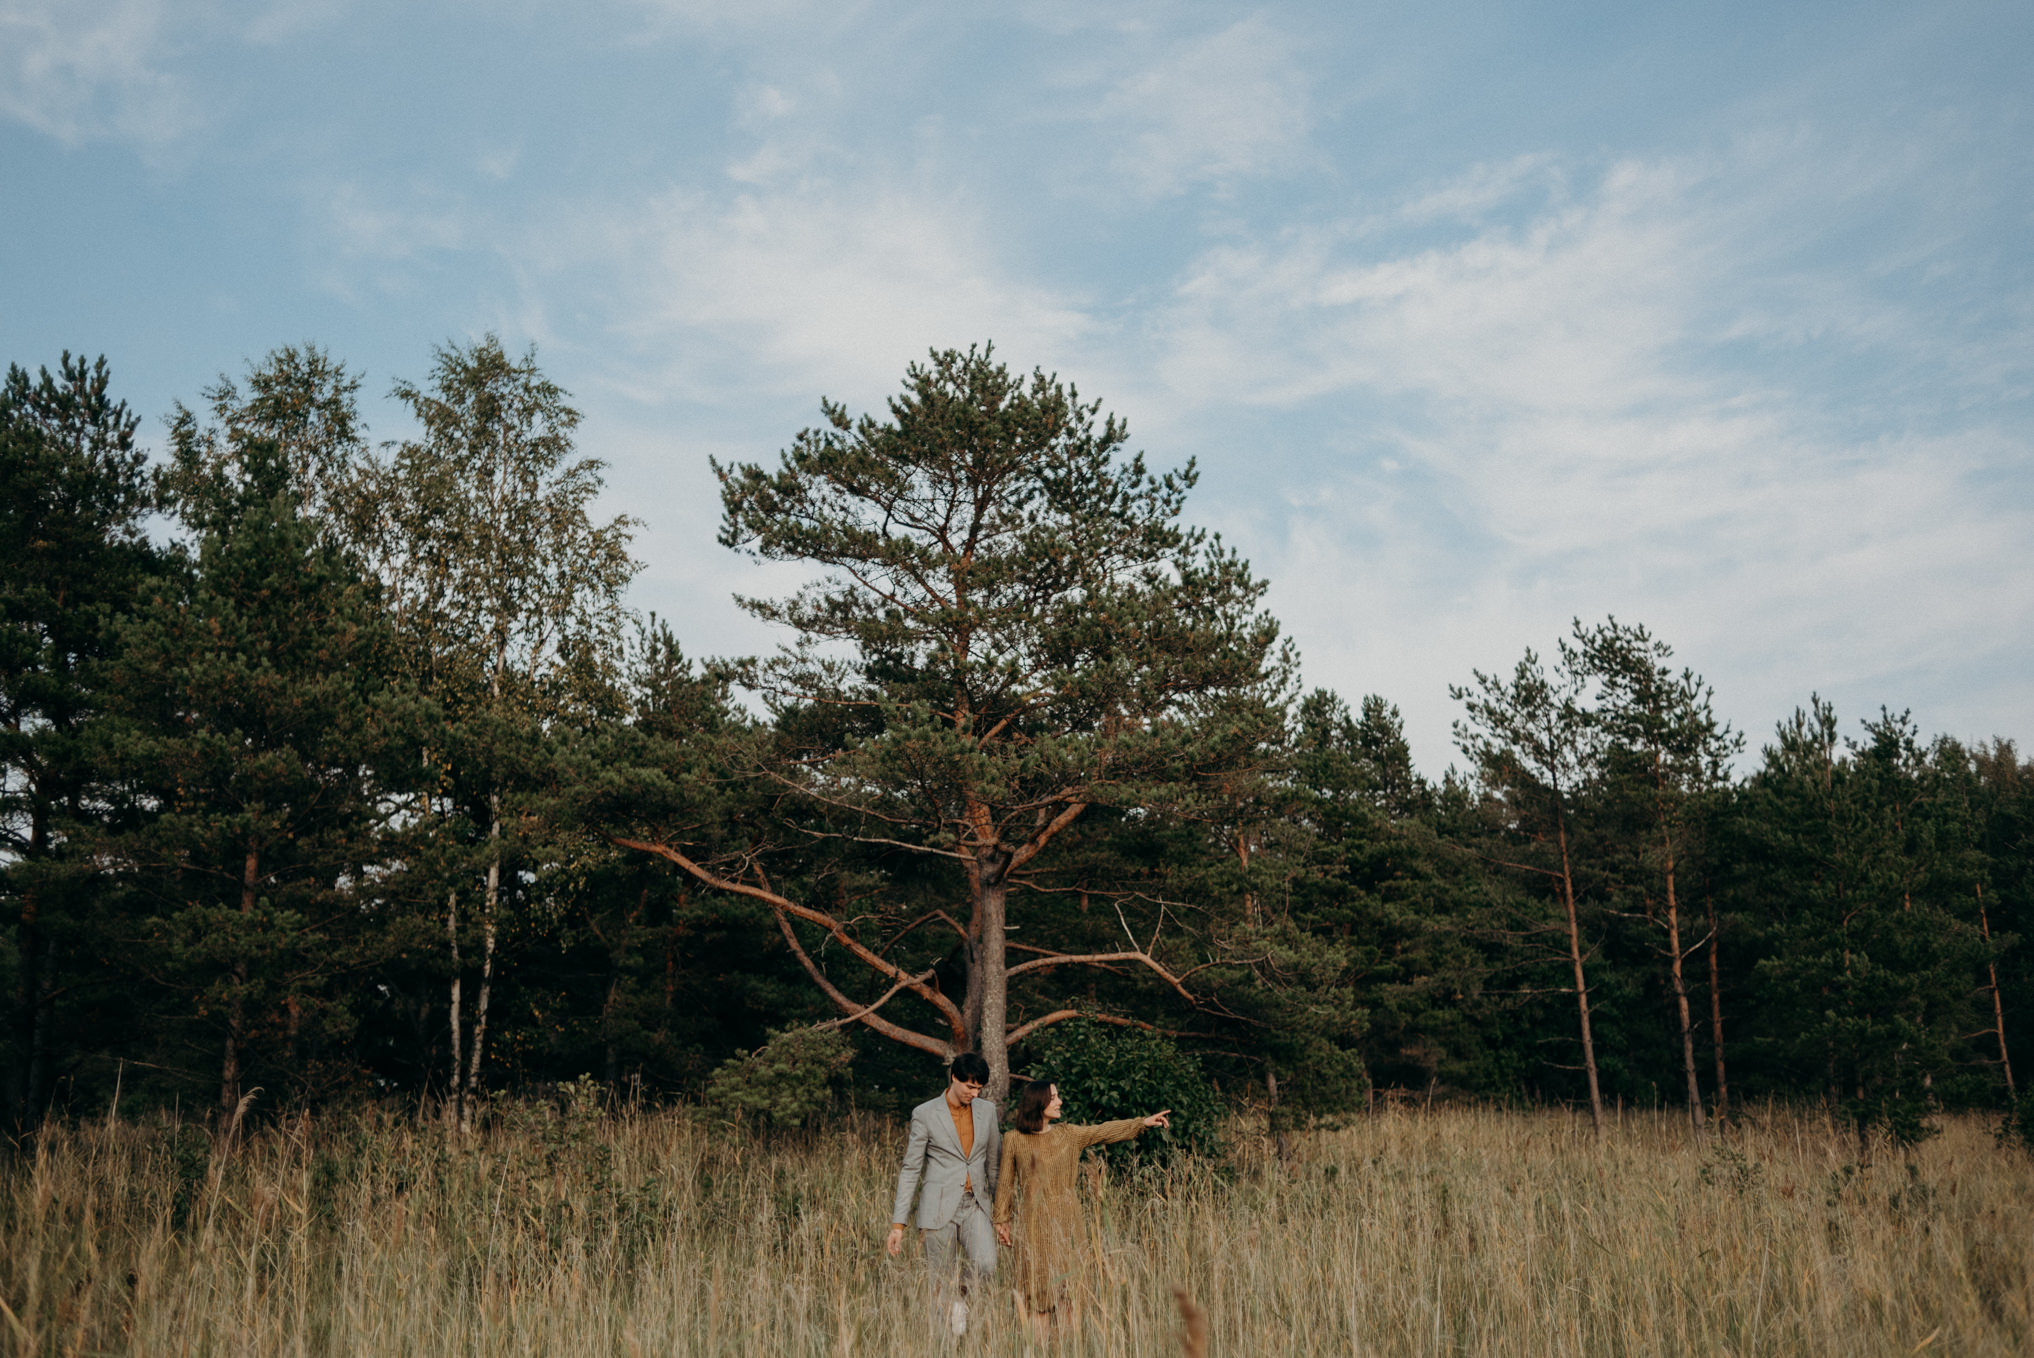 man in suit and woman in dress walking in tall grass near forest in Helsinki